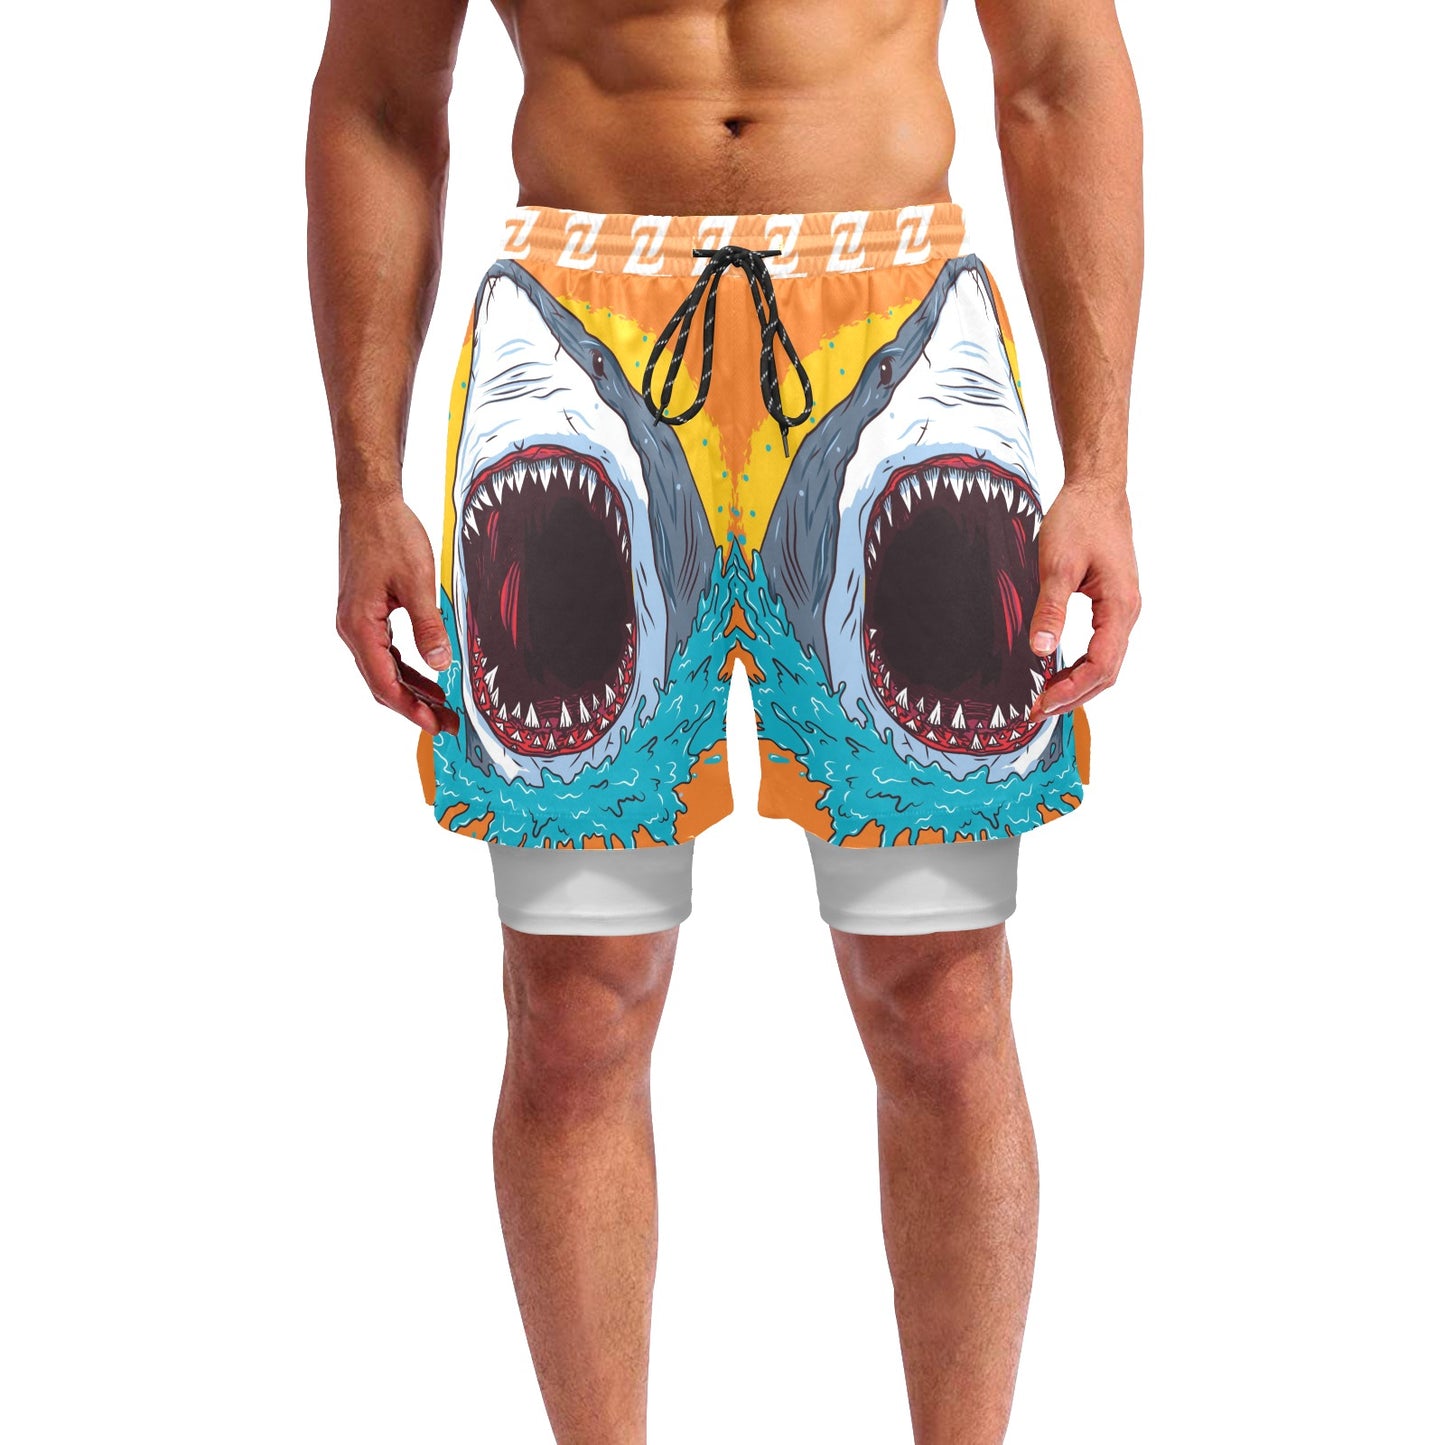 Zen Shorts with Liner - Sharks